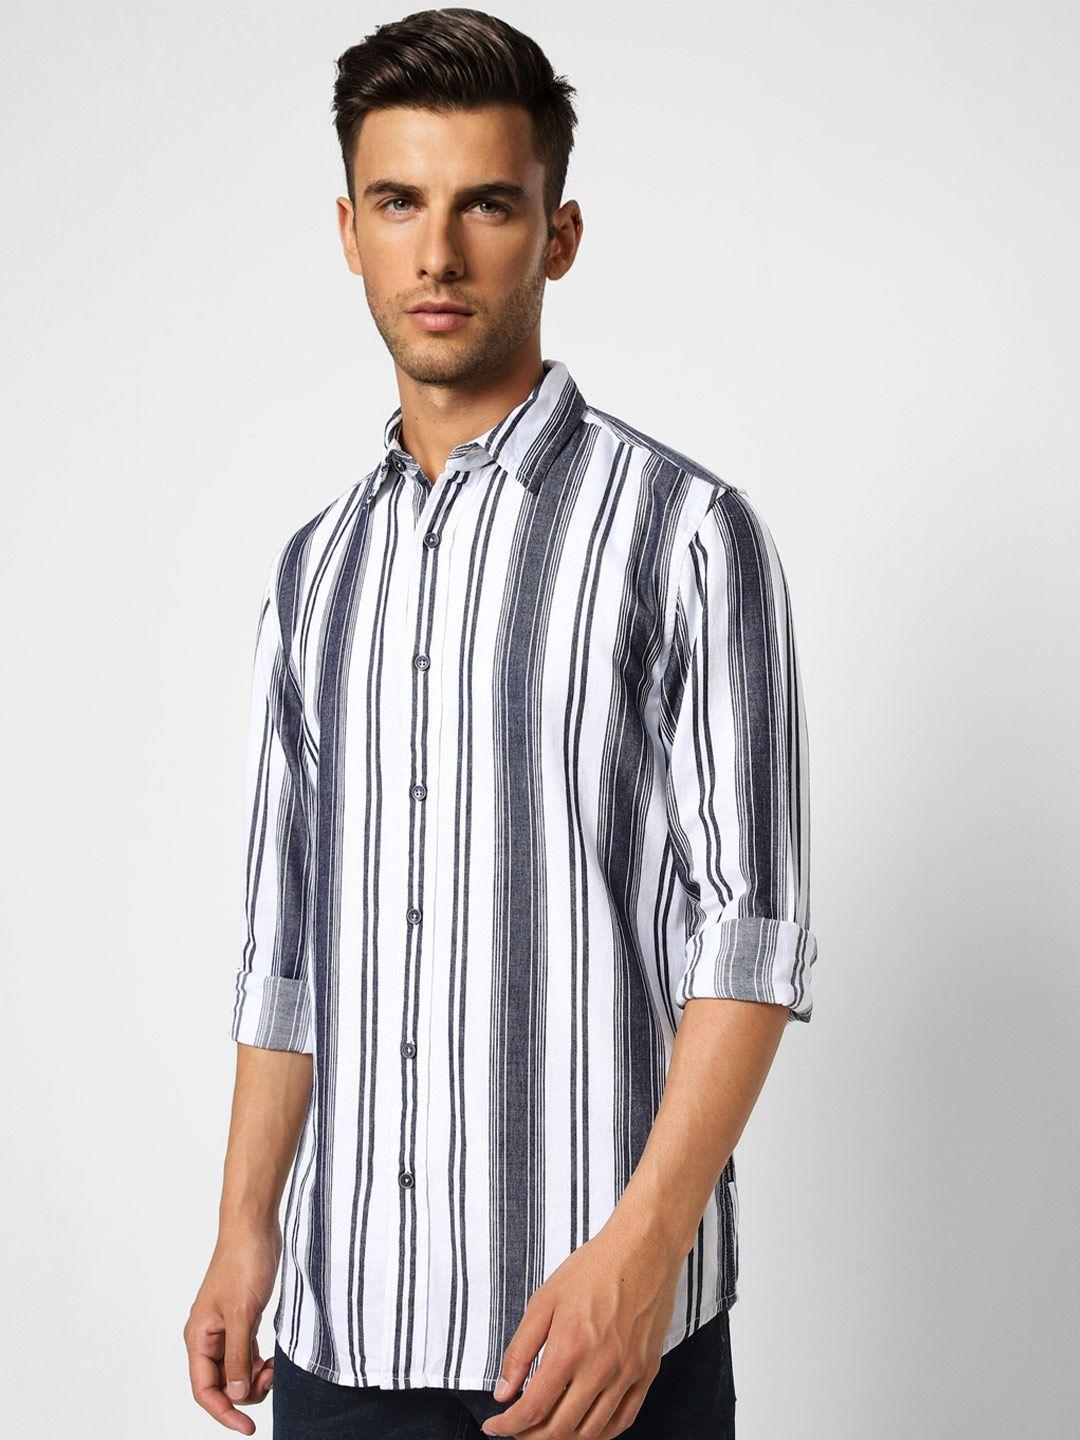 jack & jones men vertical striped casual cotton shirt